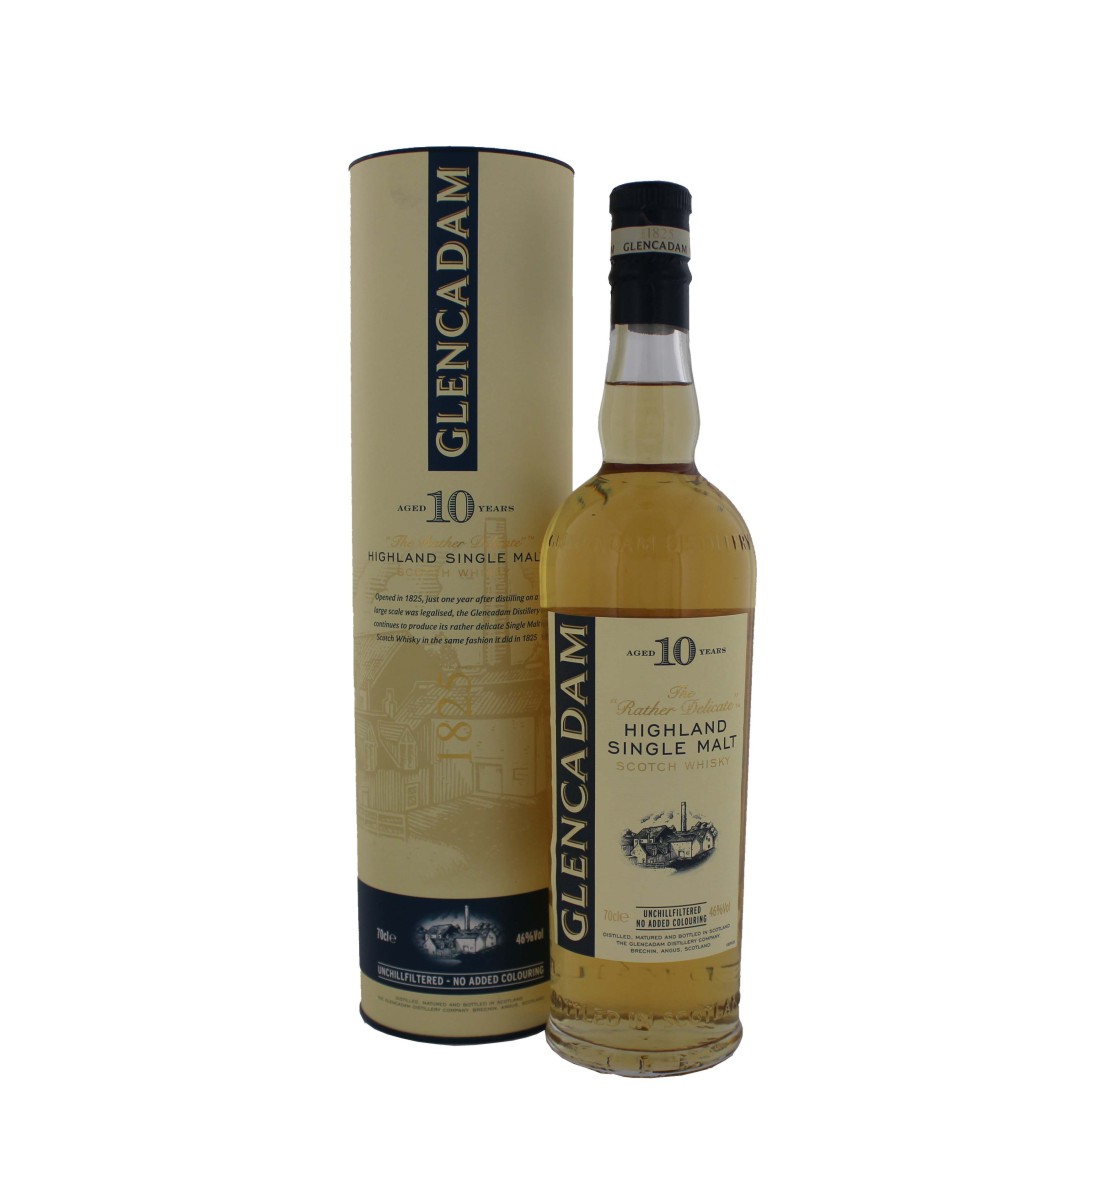 glencadam 10 ani highland single malt scotch whisky 07l tub Whisky Bowmore 10